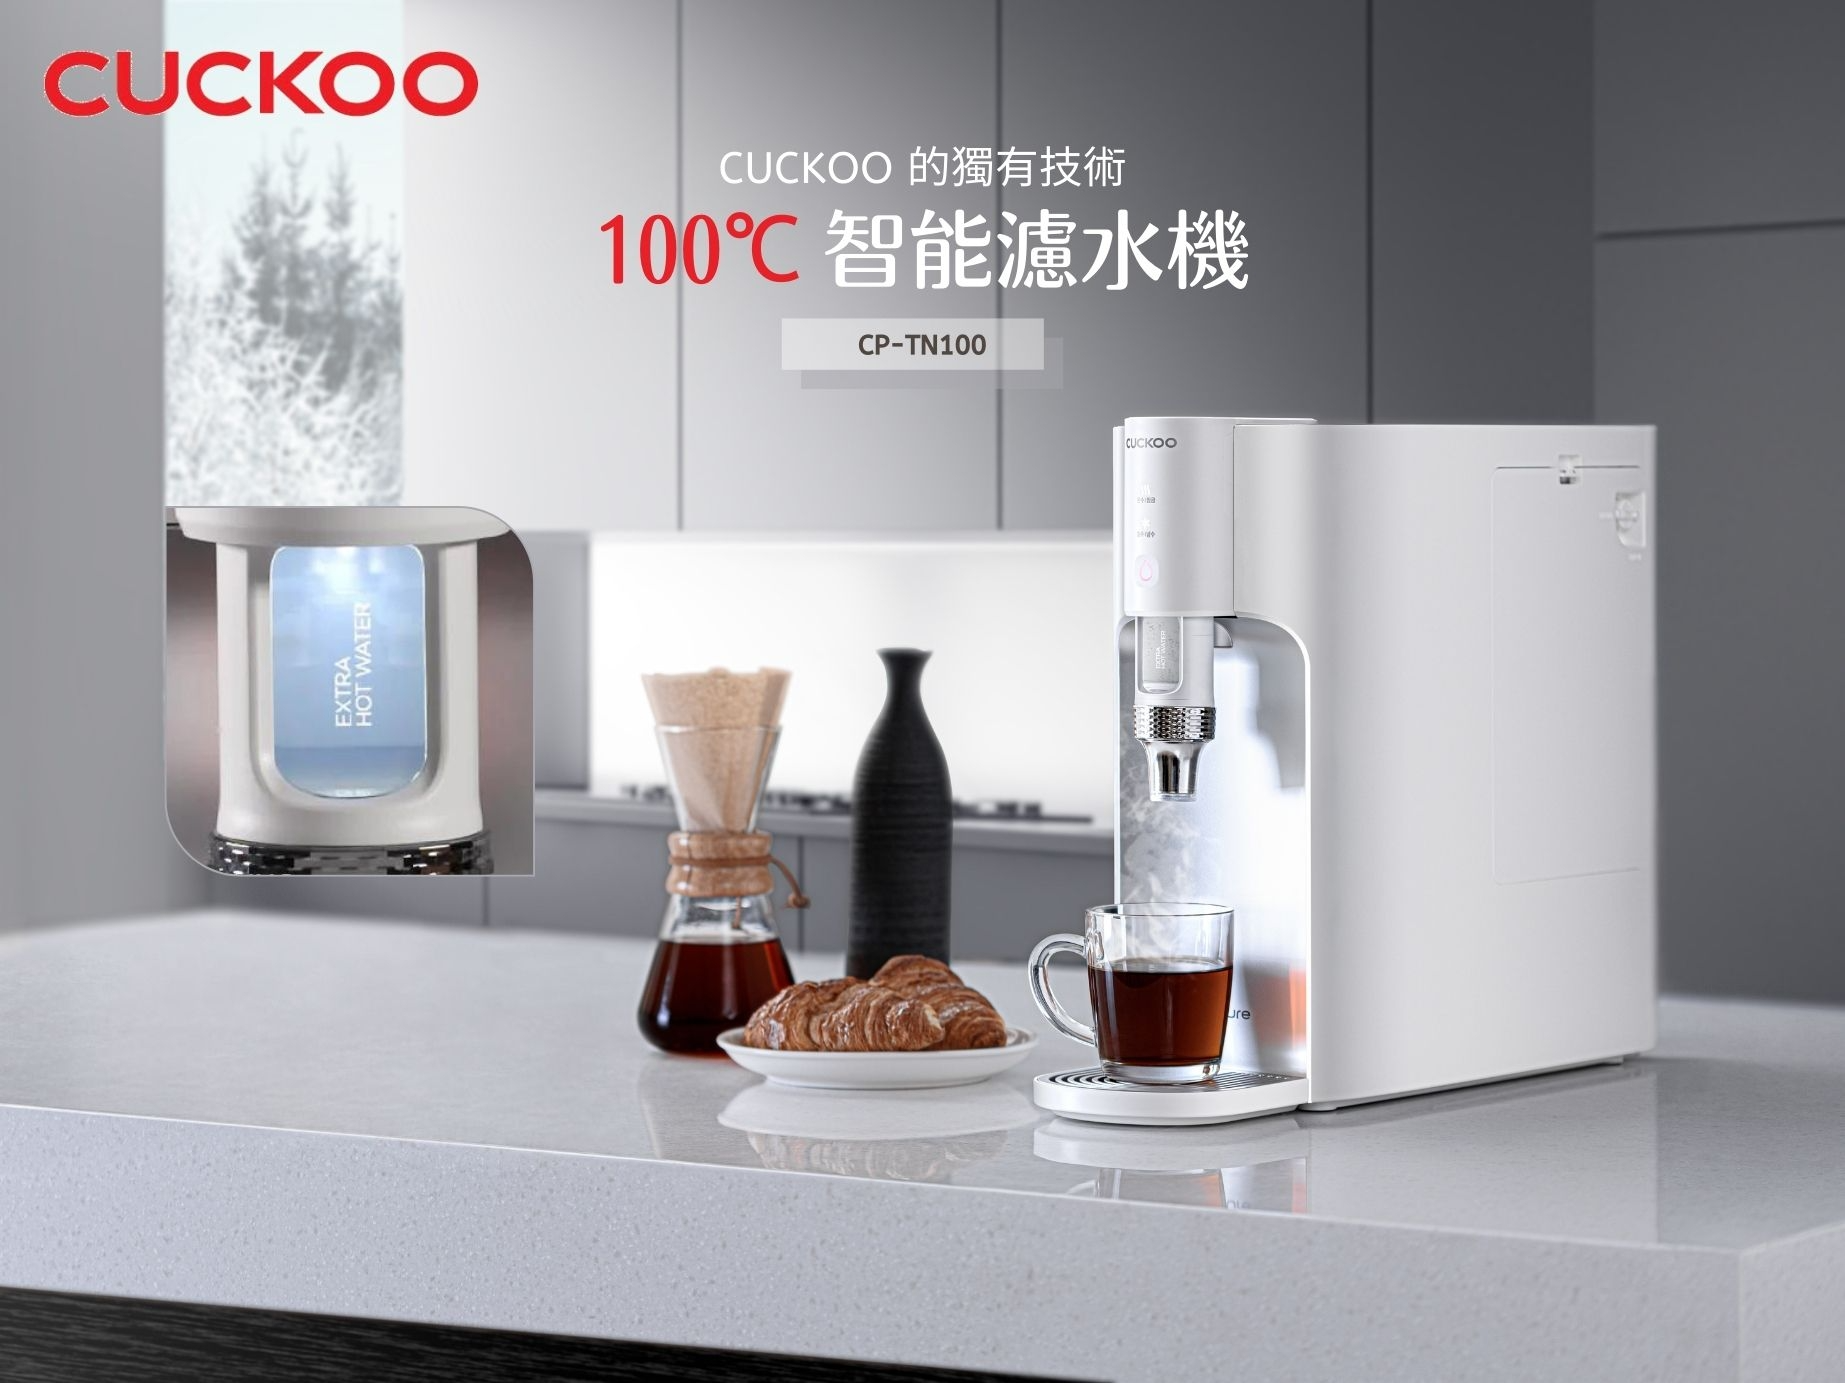 Cuckoo CP-TN100DS 韓國 100°C 智能納米濾水機 (深銀灰色)